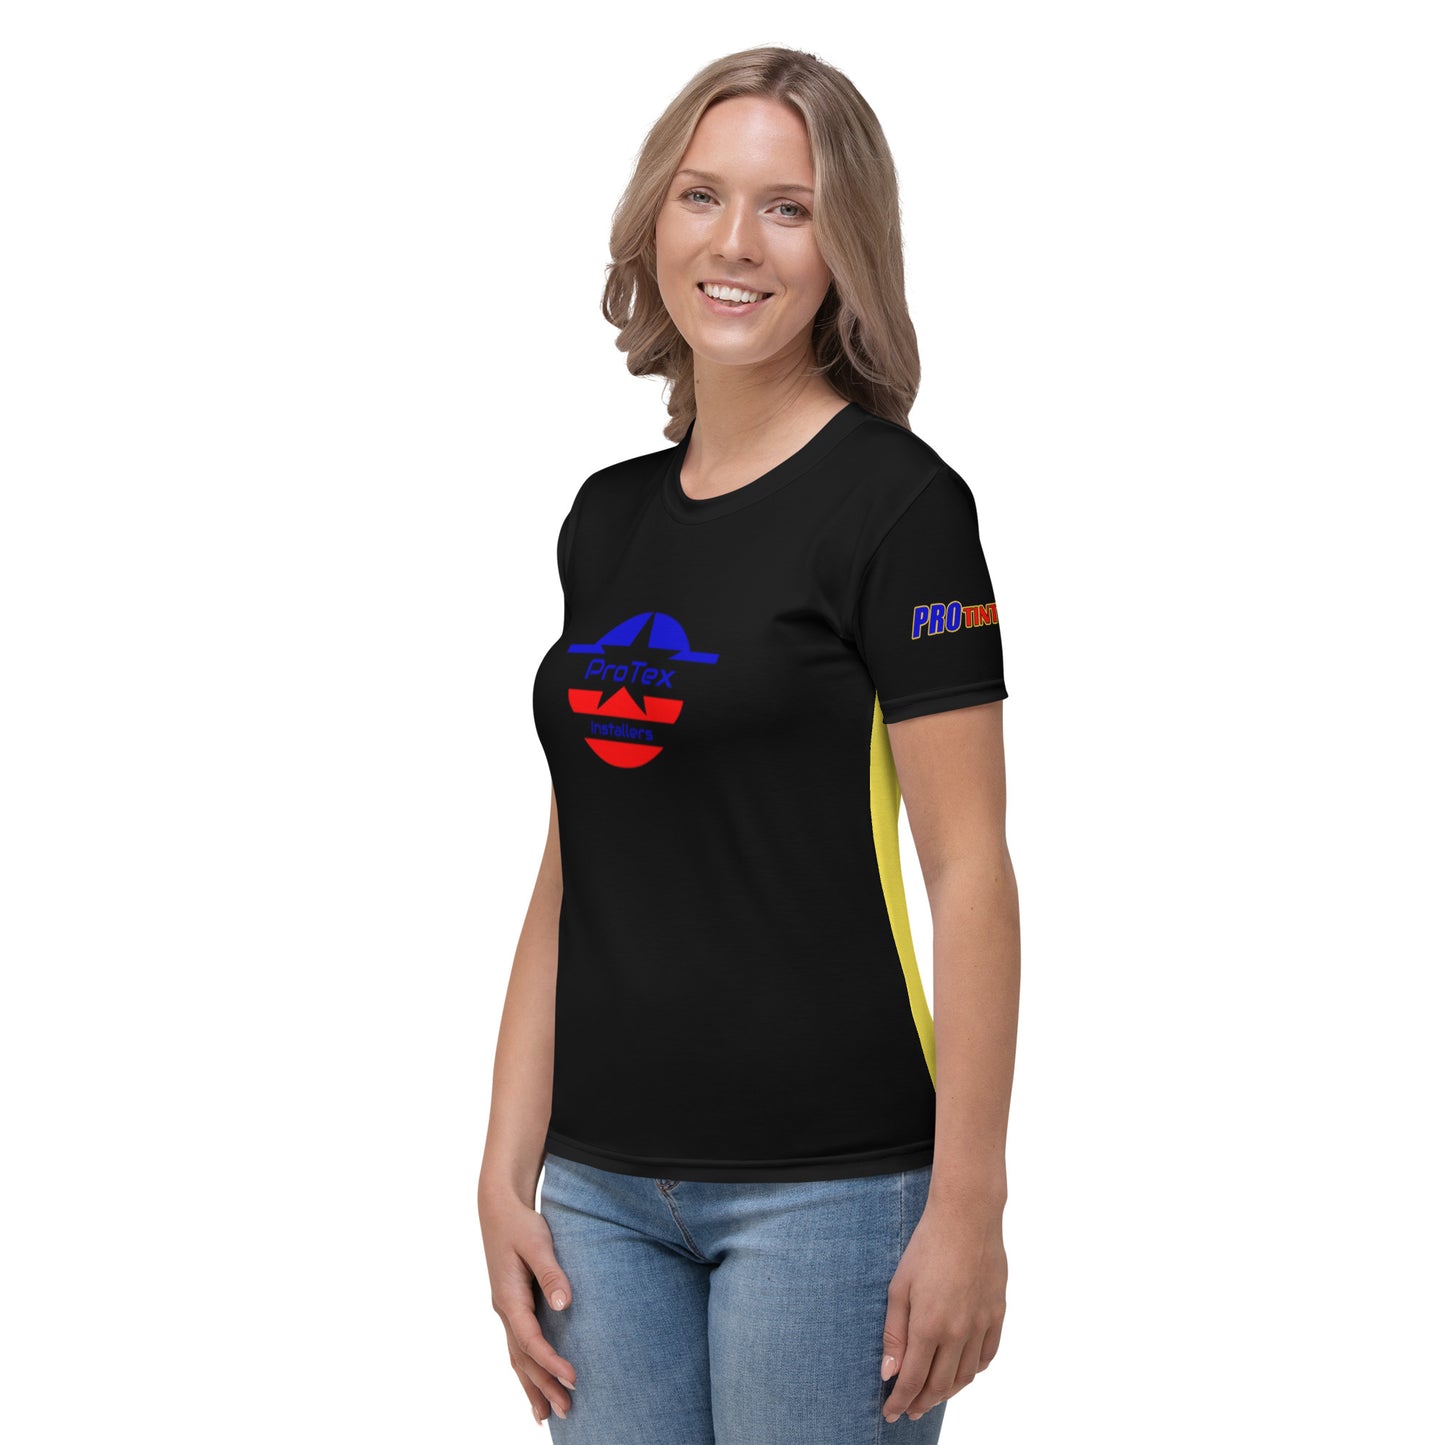 Pro Tex Women's T-shirt (Special Design)